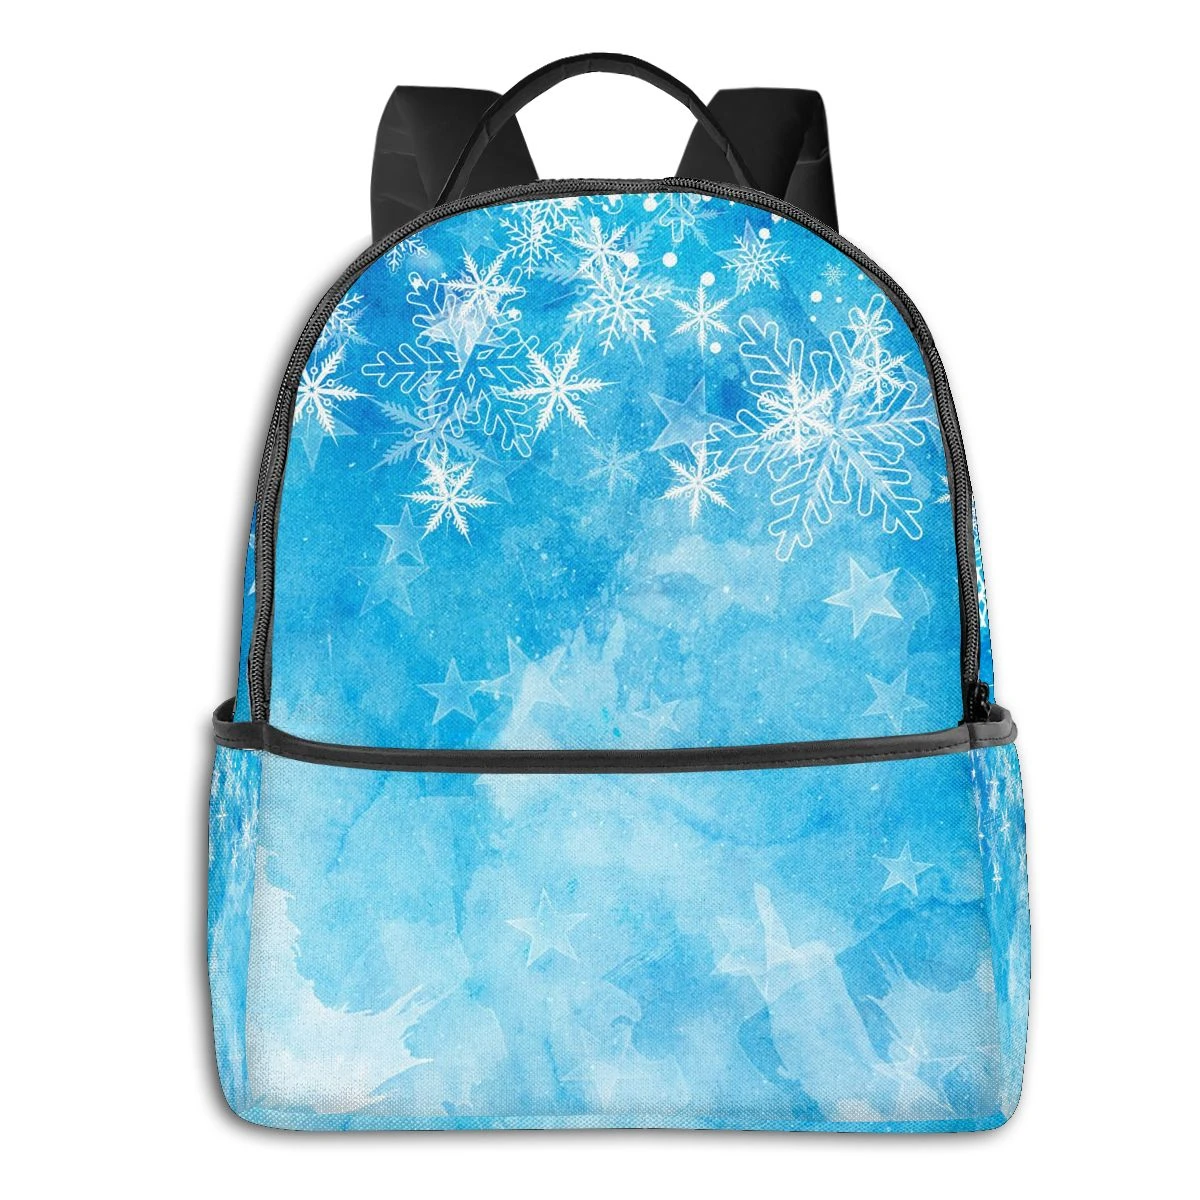 Backpack Christmas Snowflakes On Light Blue Background Laptop Travel School College Backpacks Bag 